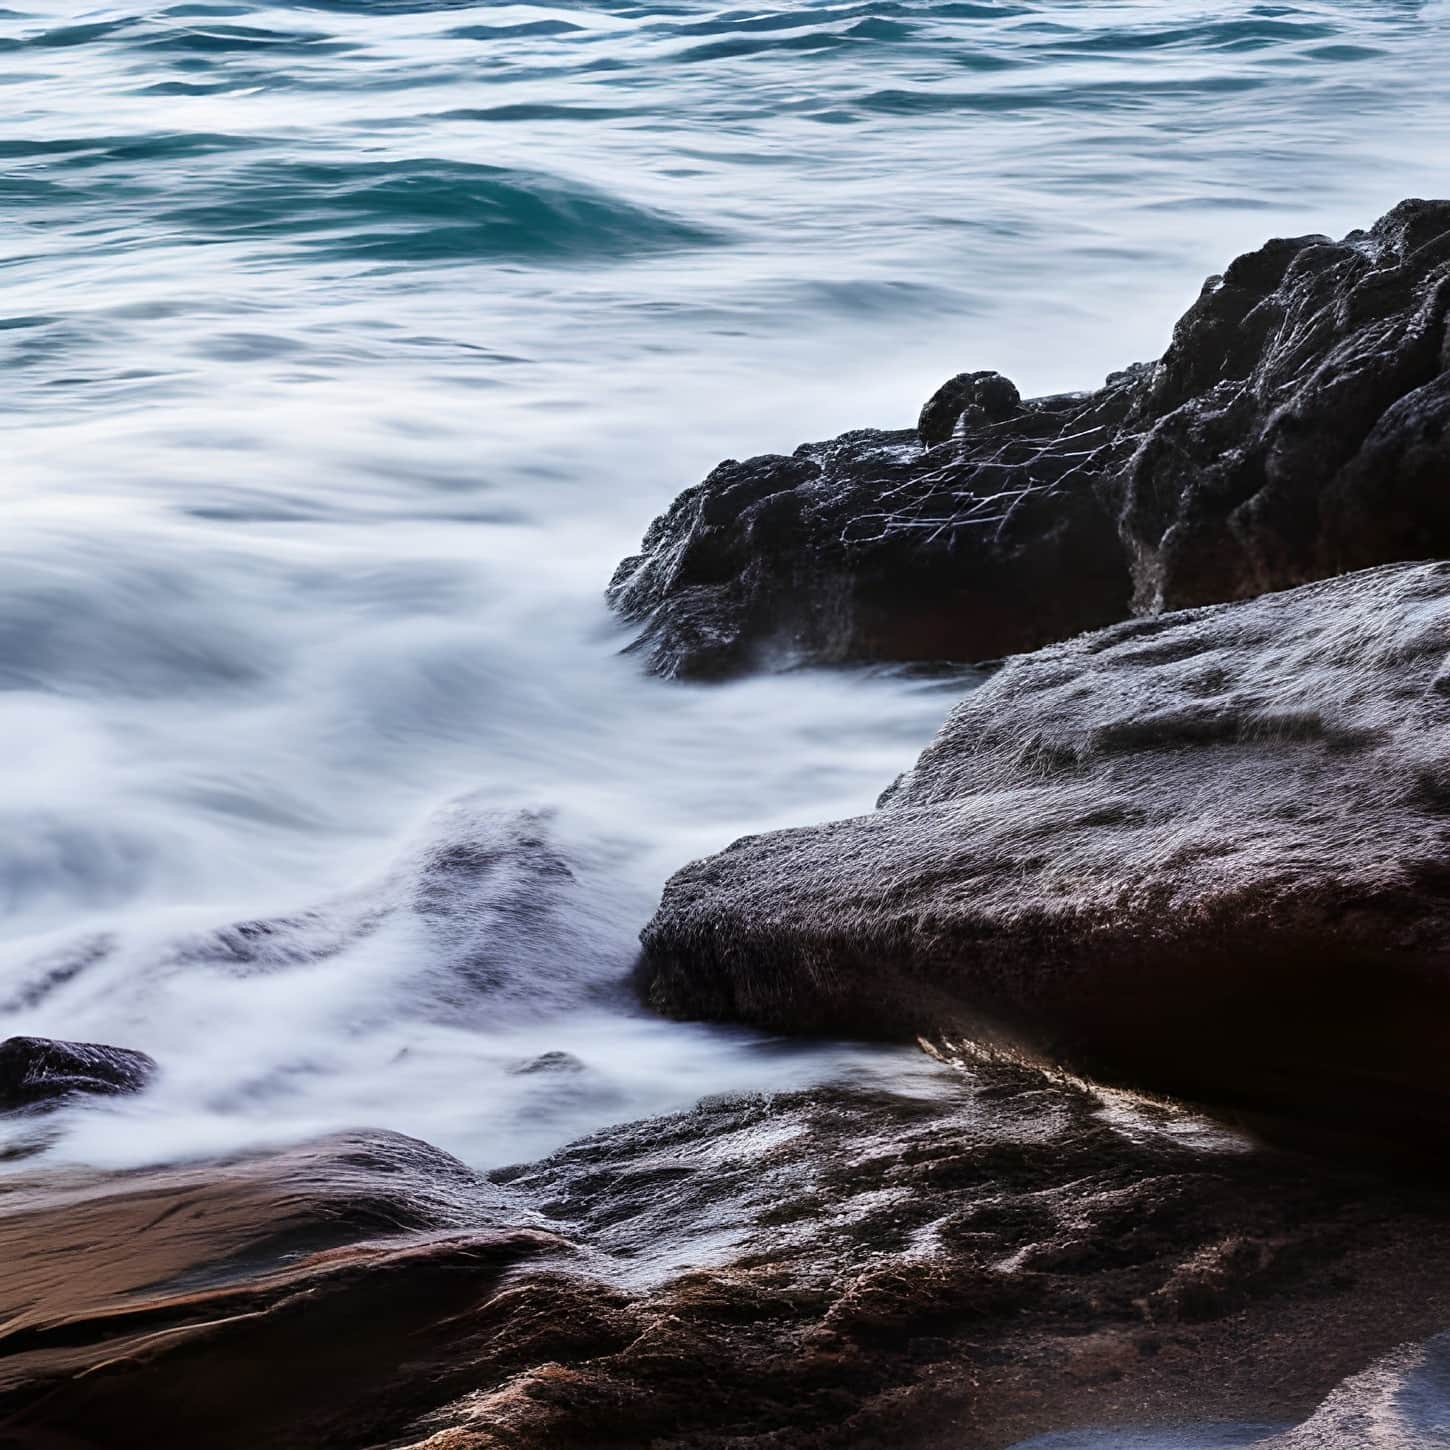 Waves splashing against the rocks at the ocean – AI Art